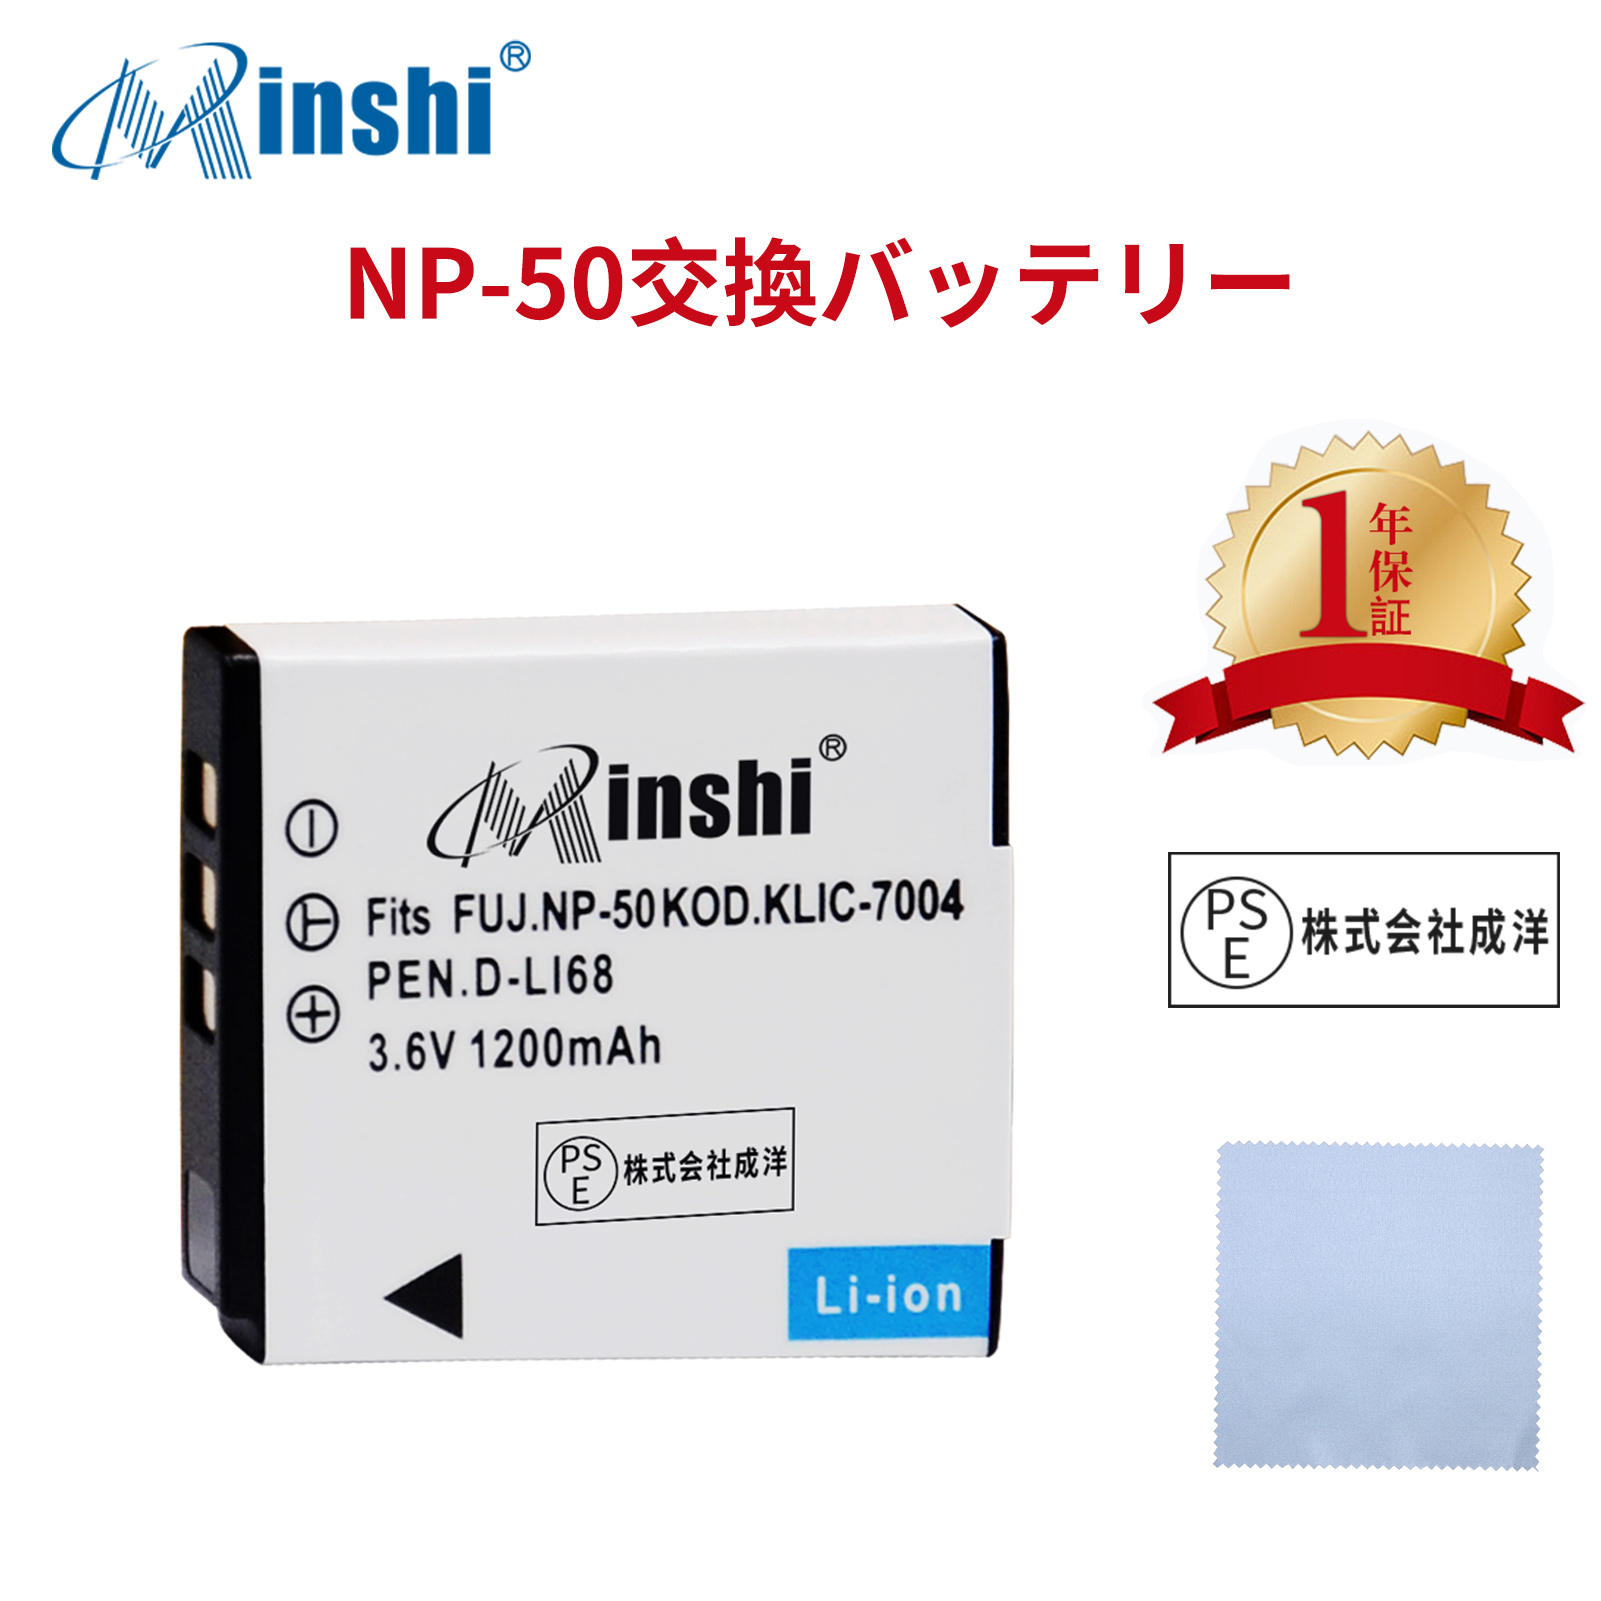 【清潔布ー付】minshi FUJIFILM NP-50 F900EXR 対応 NP-50  1200mAh PSE認定済 高品質 NP-50NP-50、NP-50A互換バッテリー